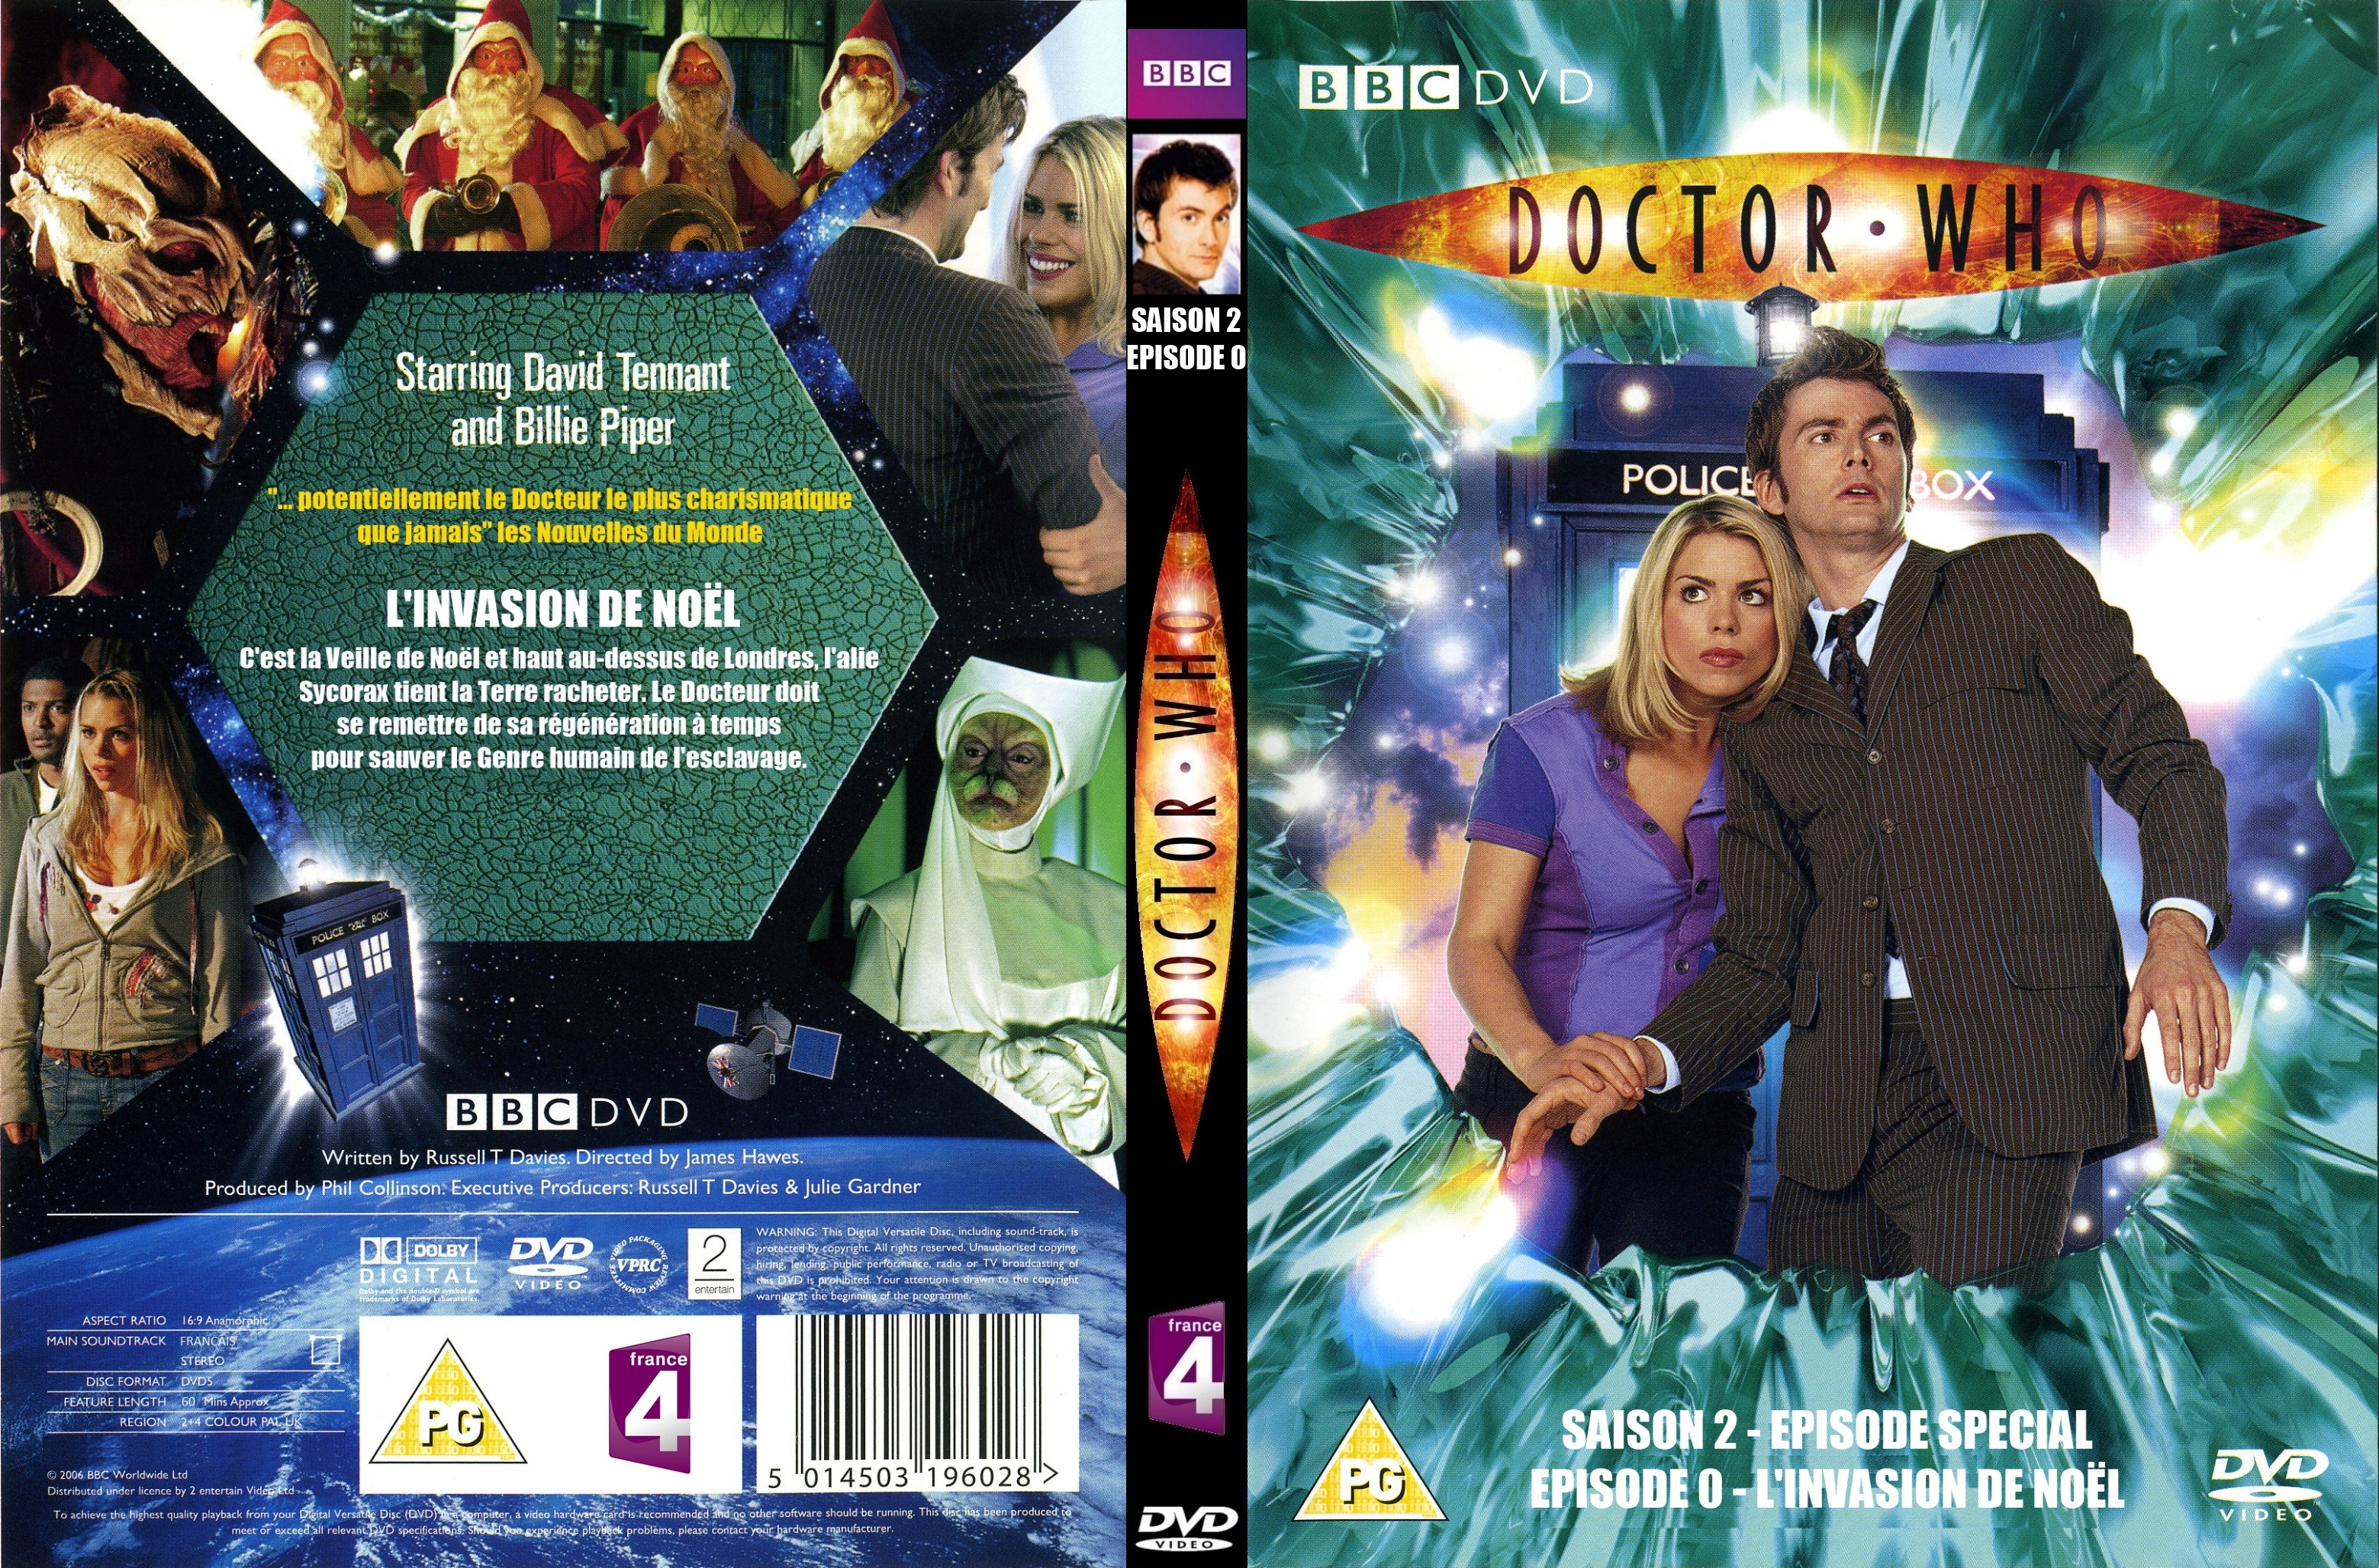 Jaquette DVD Doctor Who Saison 2 pisode 0 custom